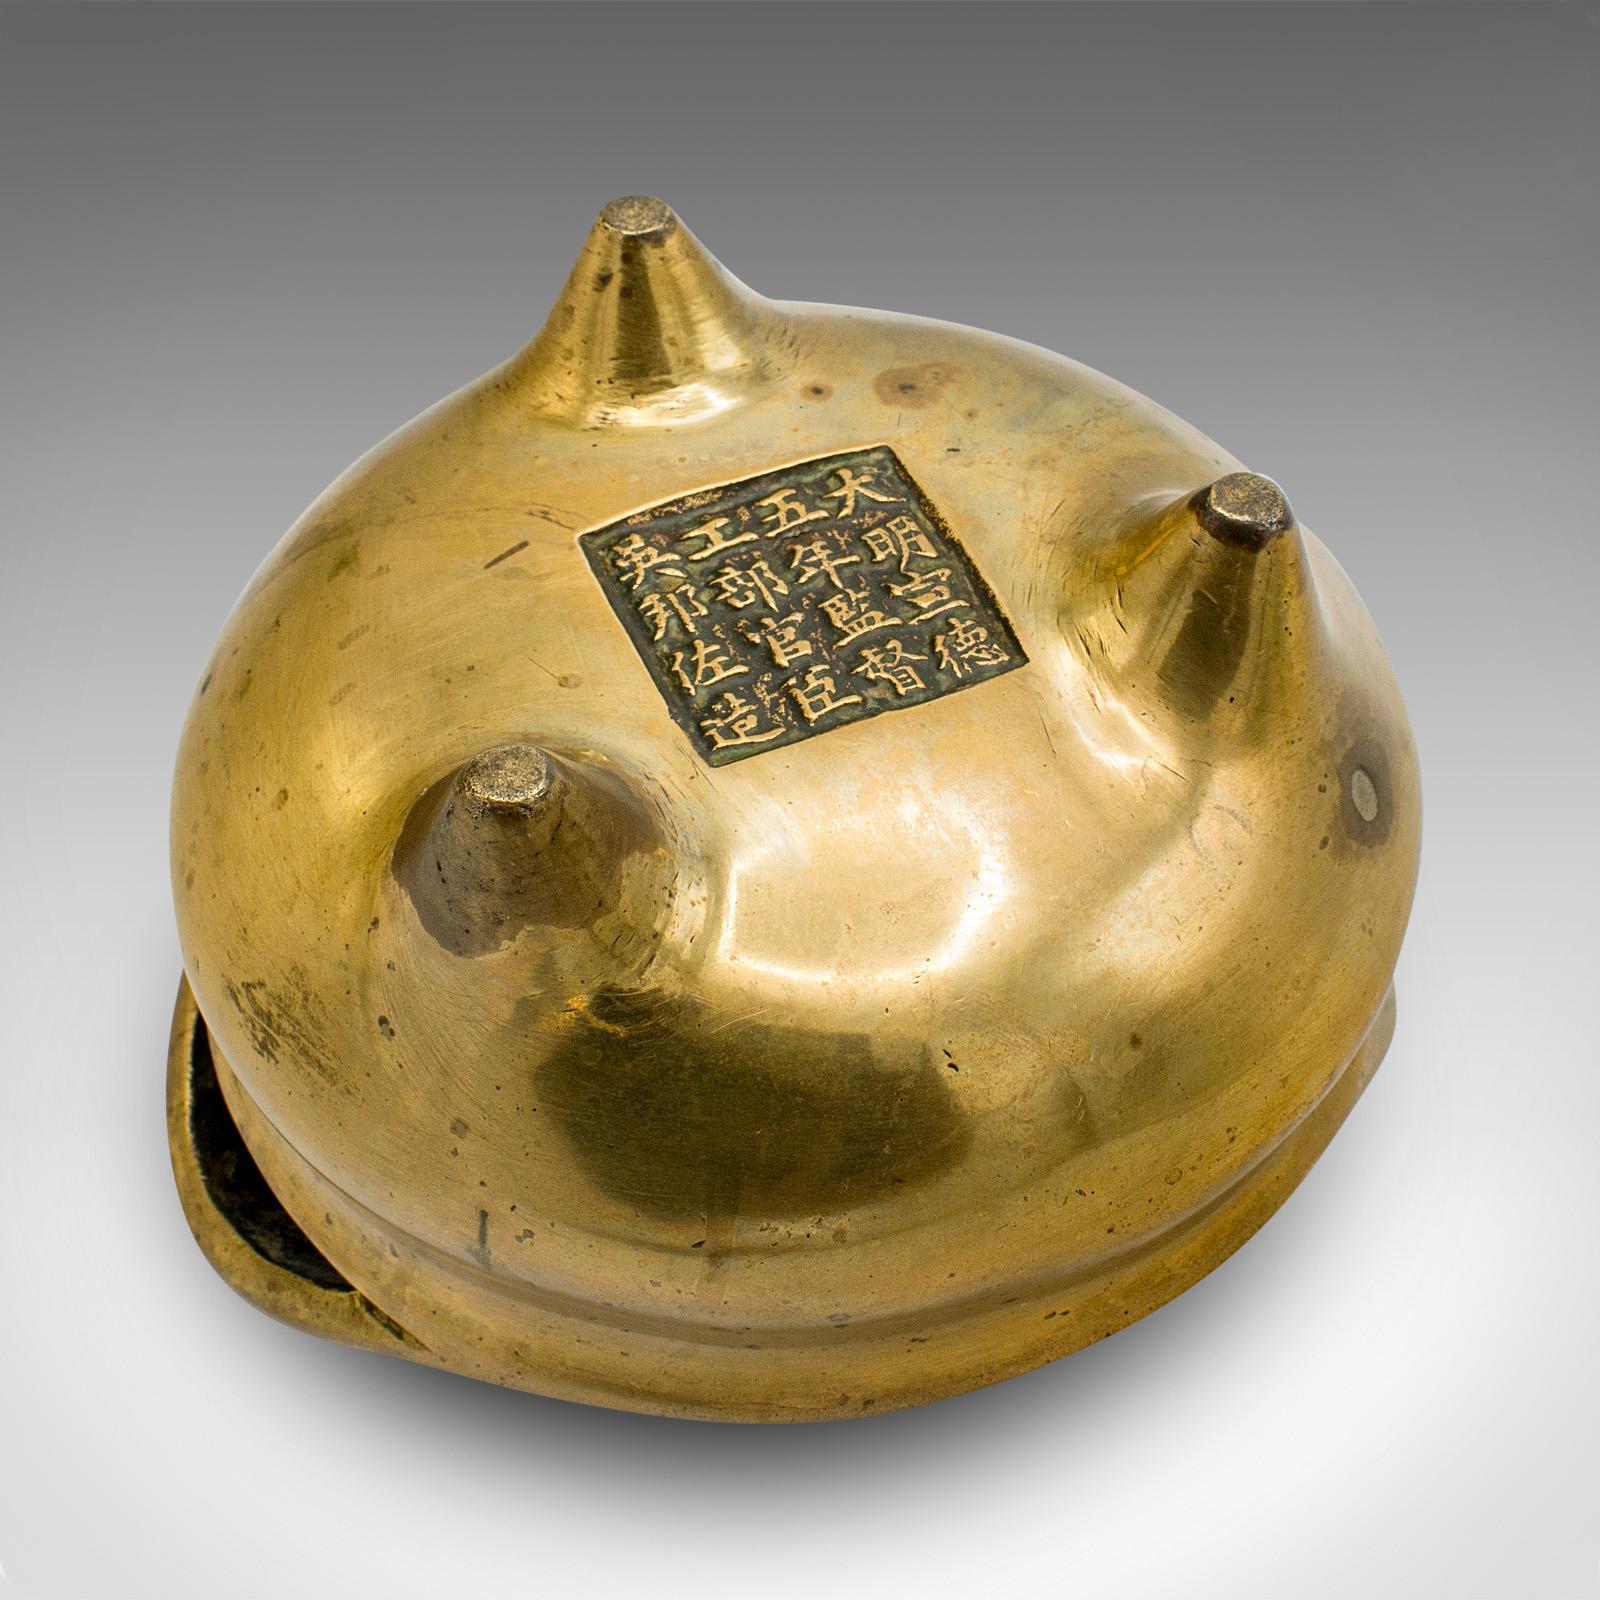 Antique Censer, Chinese, Bronze, Incense Burner, Libation Cup, Victorian, C.1850 For Sale 3